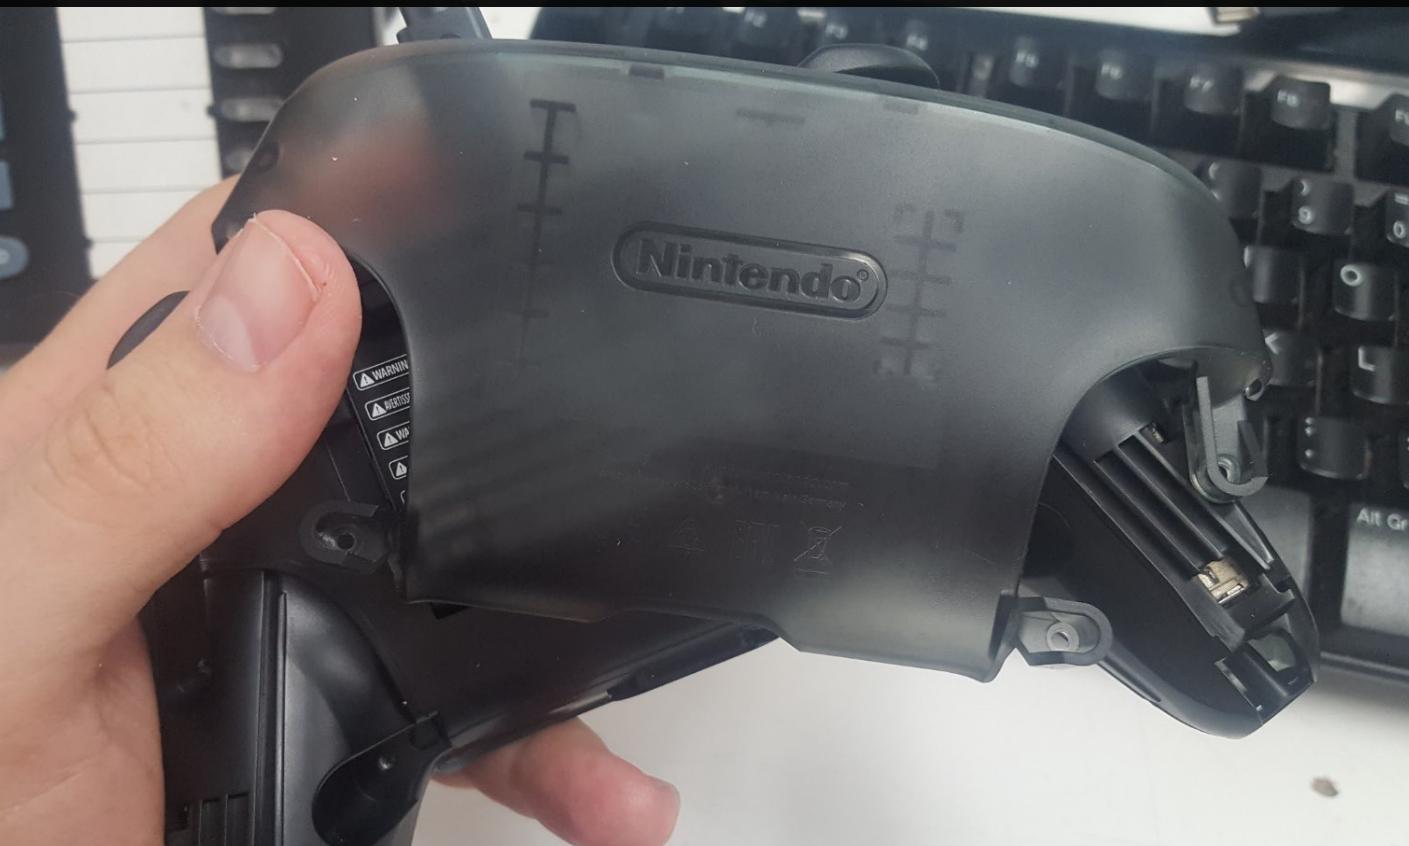 No carga Control de Nintendo Switch